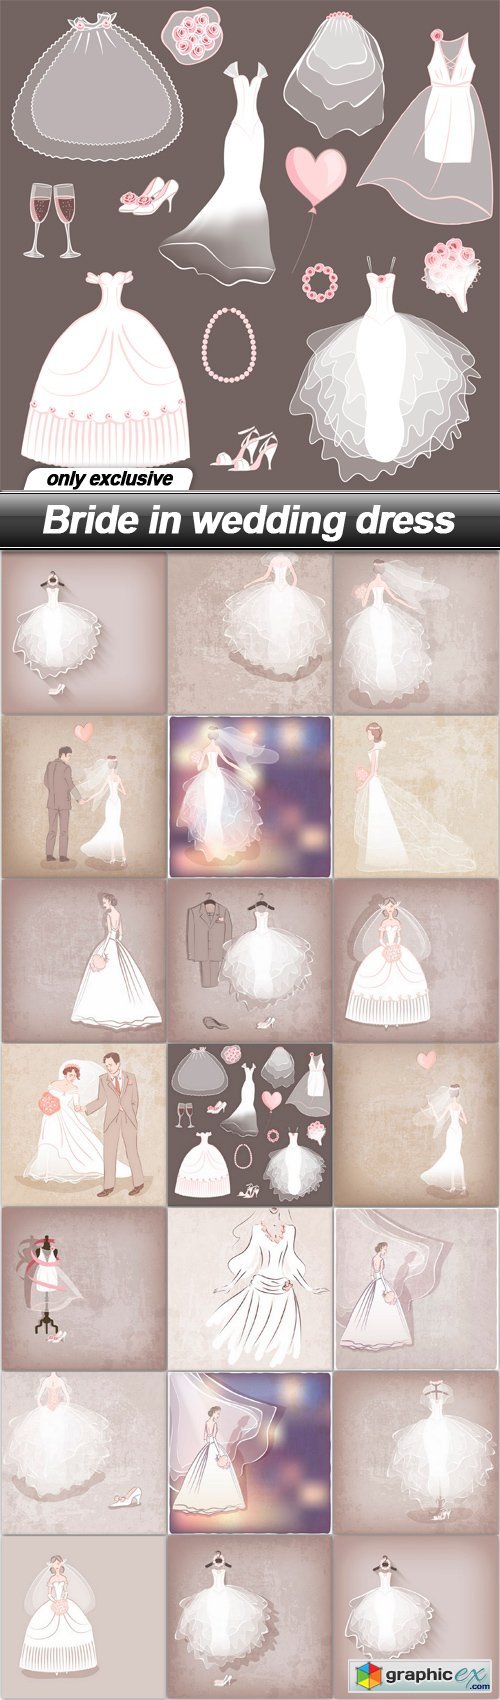 Bride in wedding dress - 20 EPS